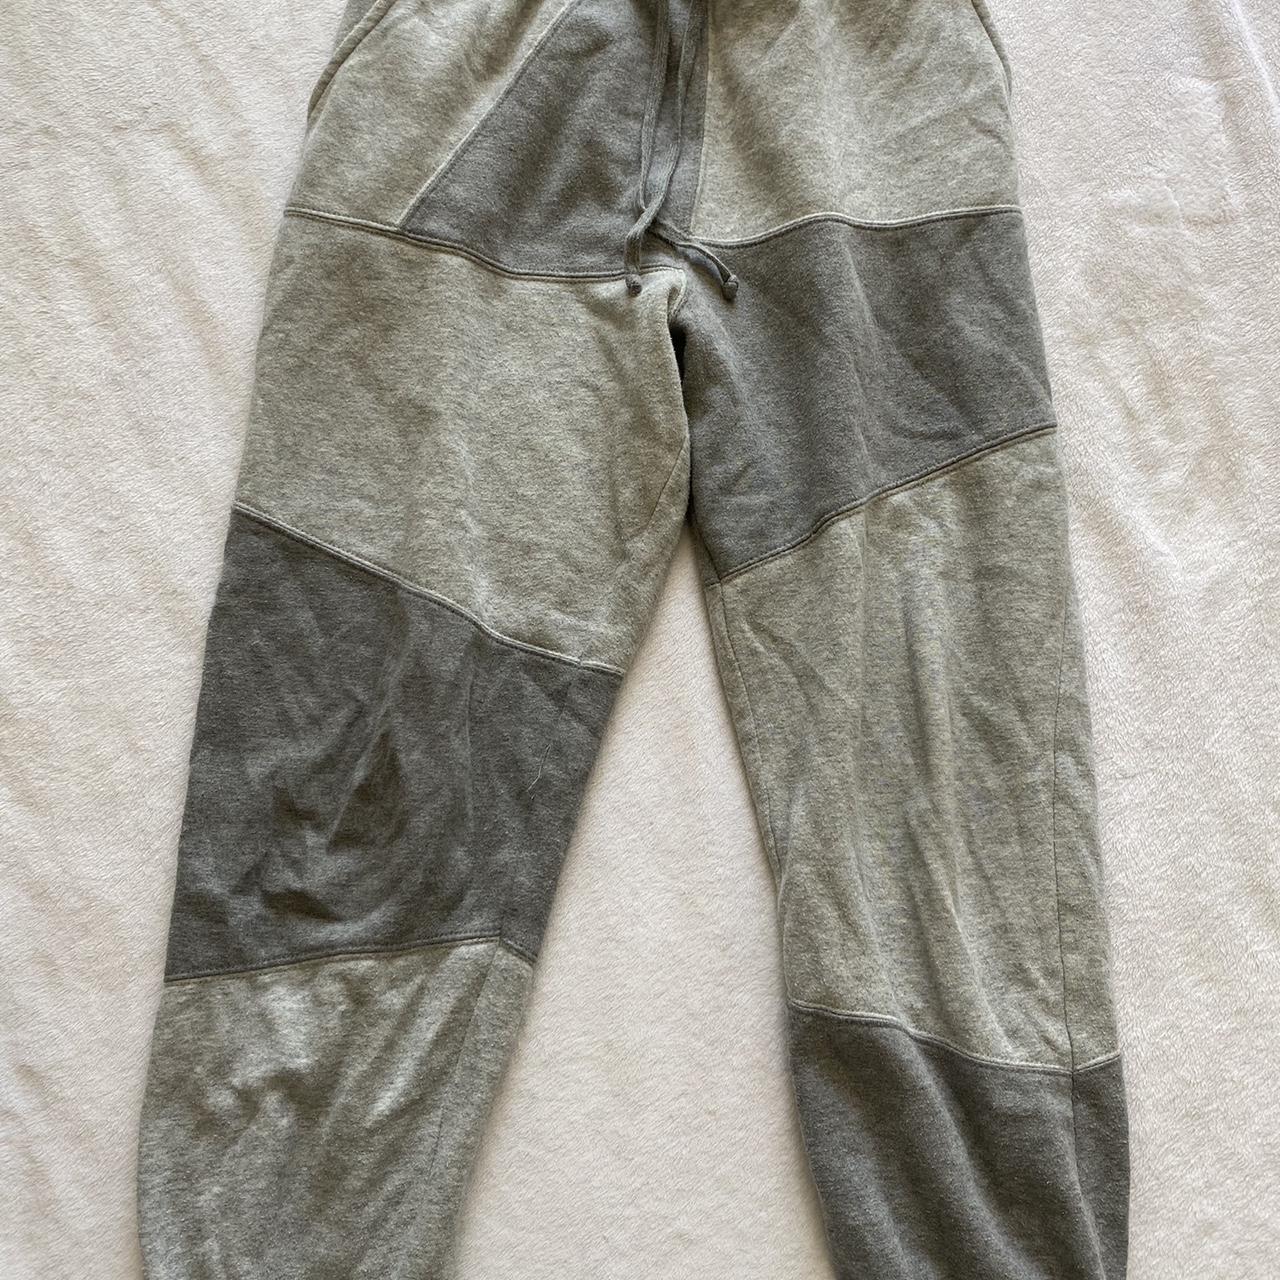 wild fable gray sweatpants 🦭 -cute patchwork - Depop